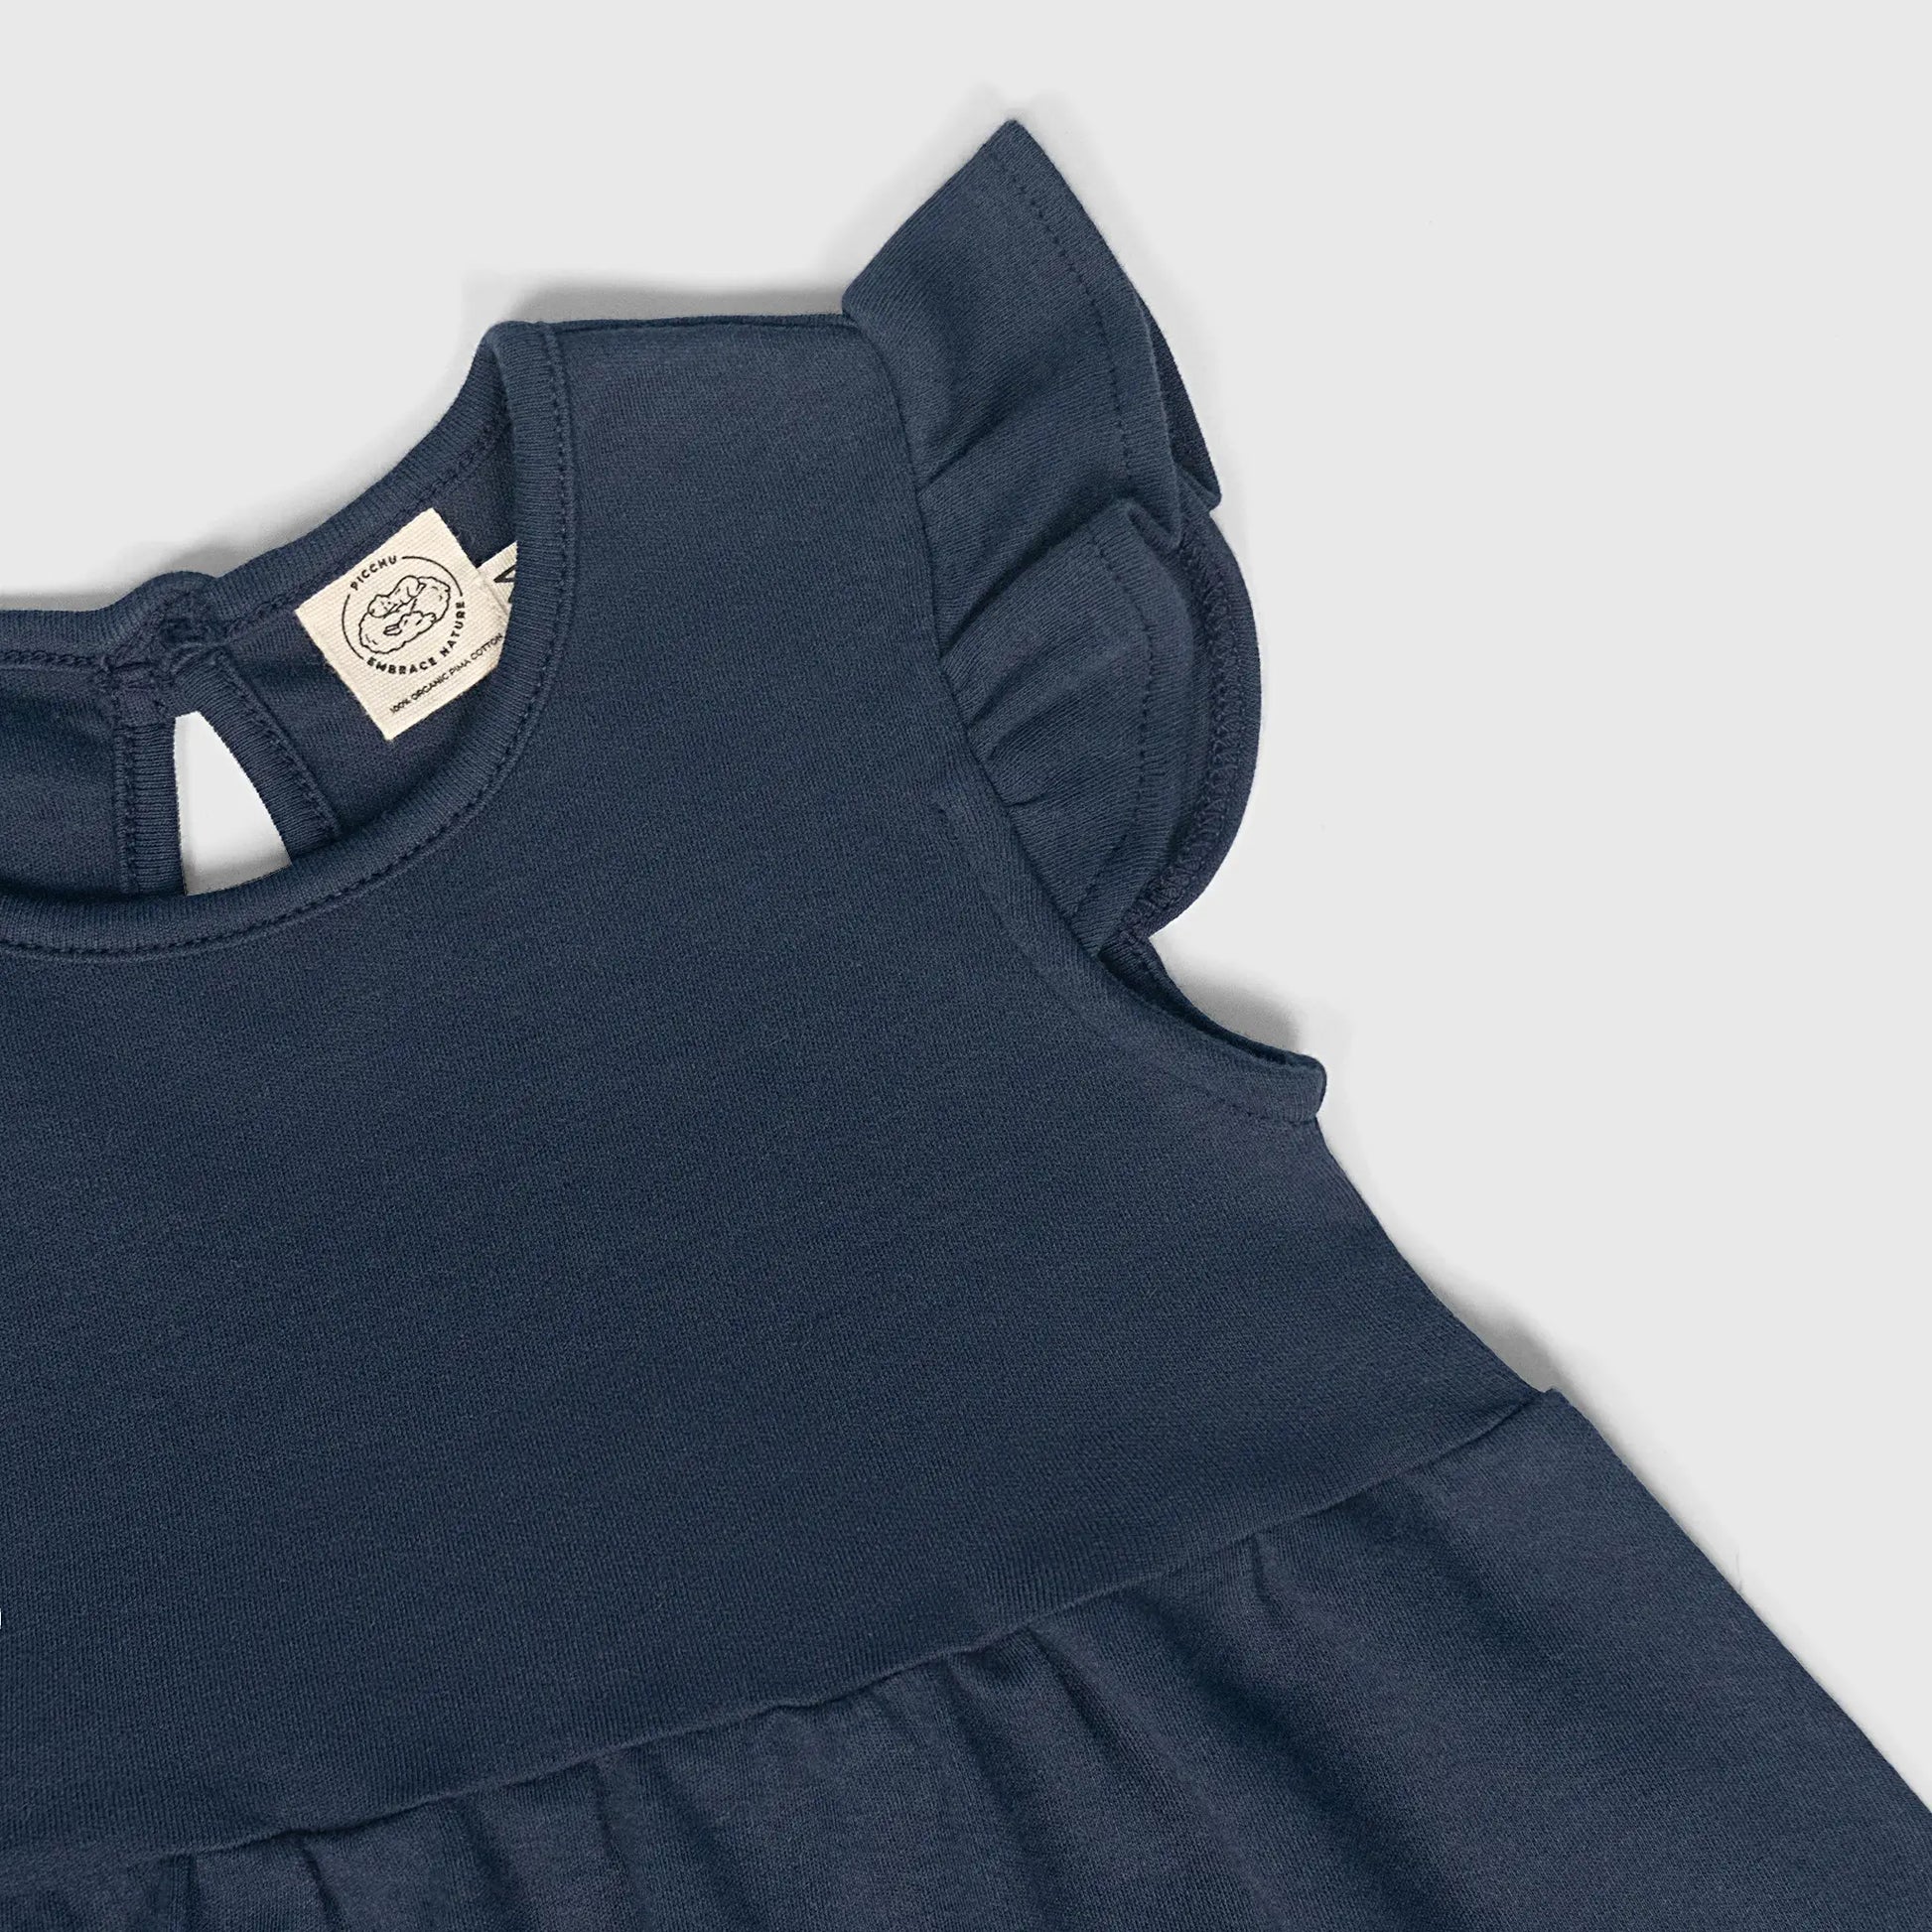 Baby Girl Organic Pima Cotton Flutter Sleeve Dress color Navy Blue